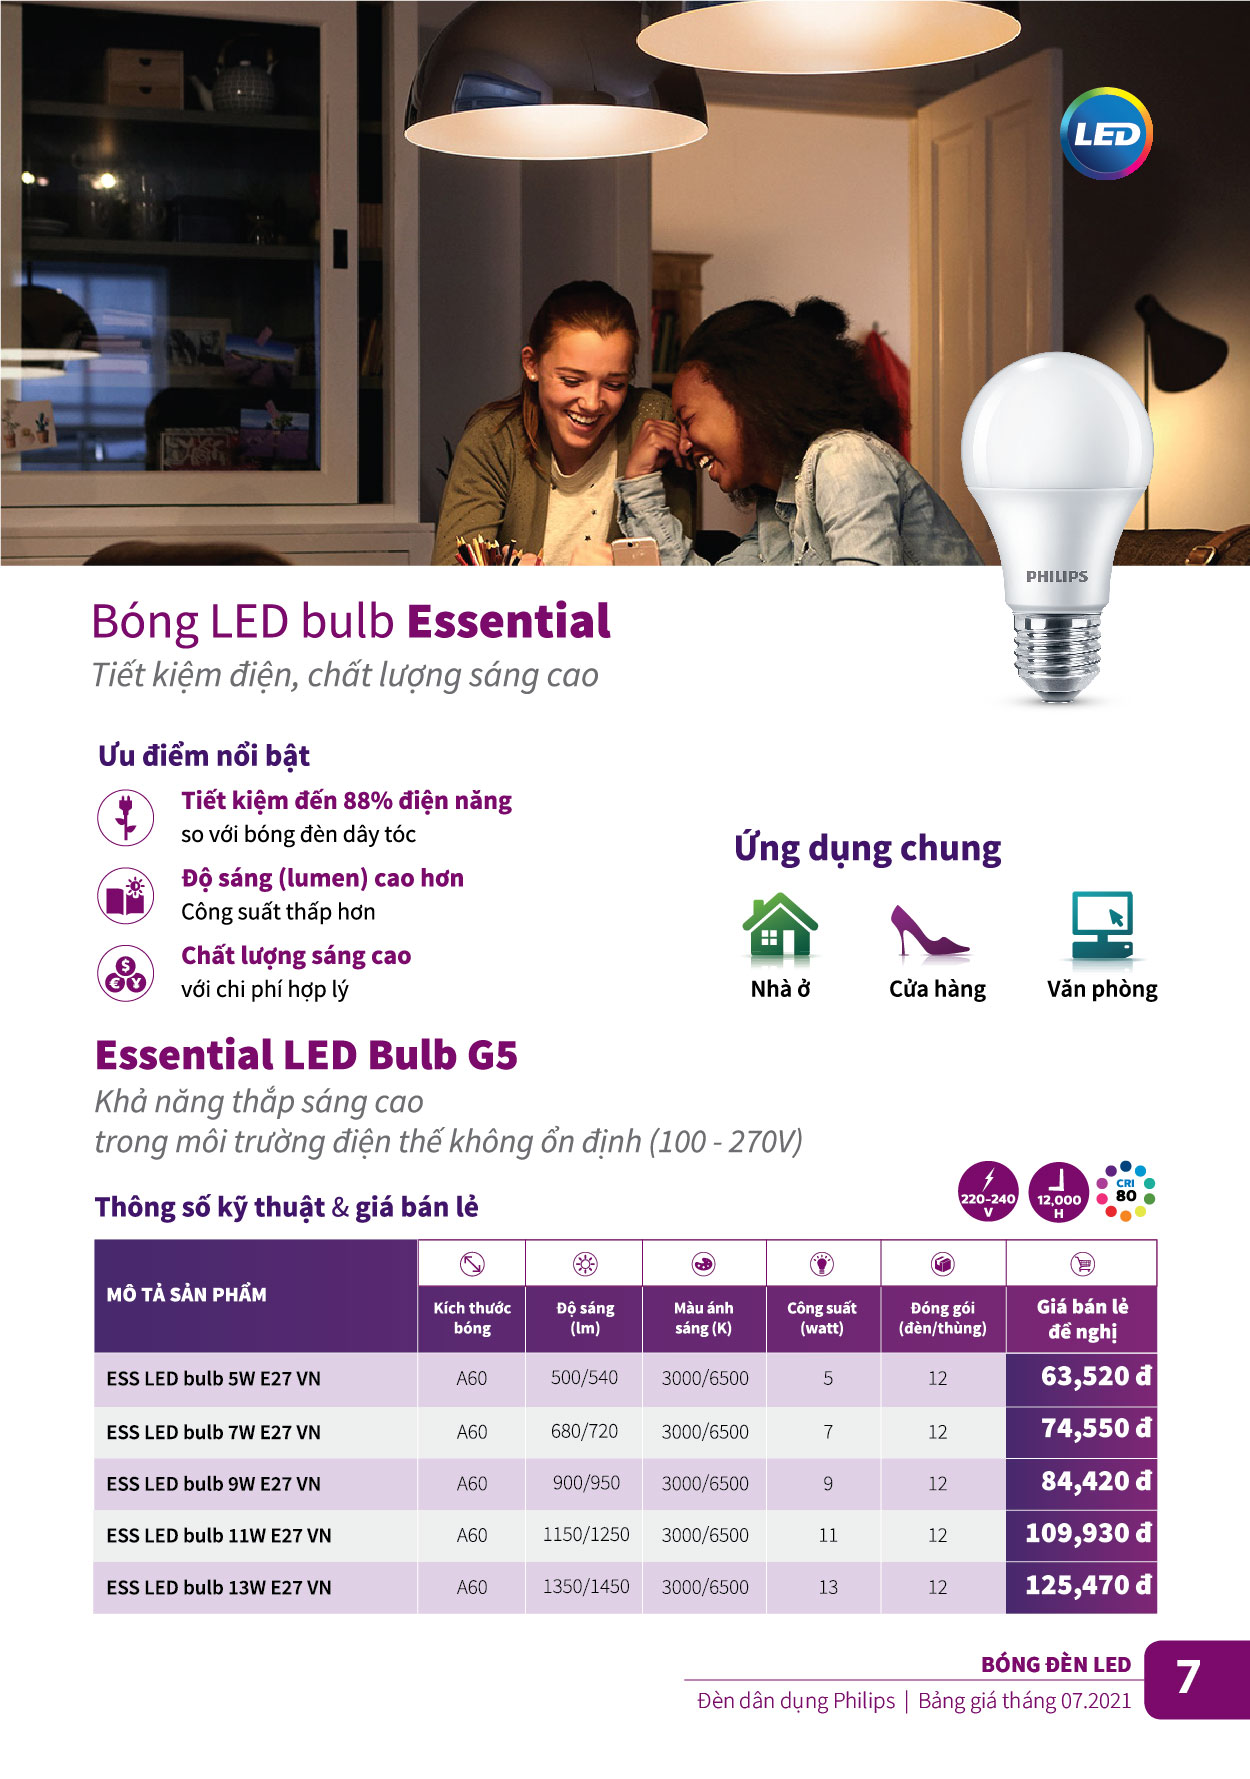 Bóng LED Bulb Essential G5 Philips